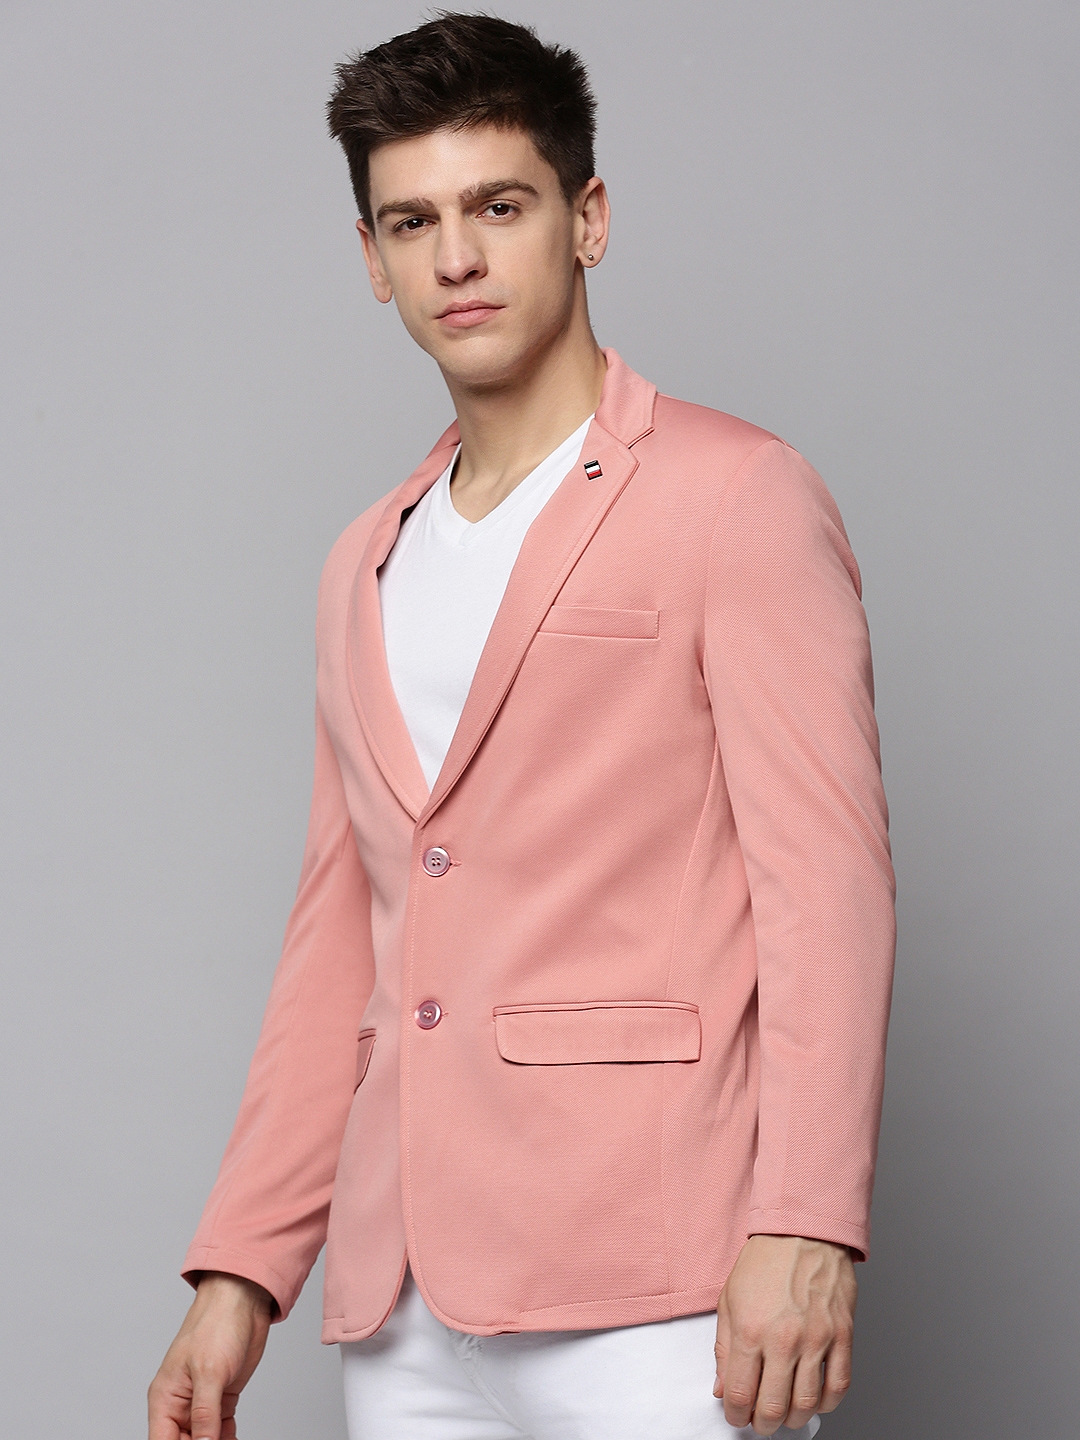 SHOWOFF Men's Notched Lapel Solid Pink Open Front Blazer